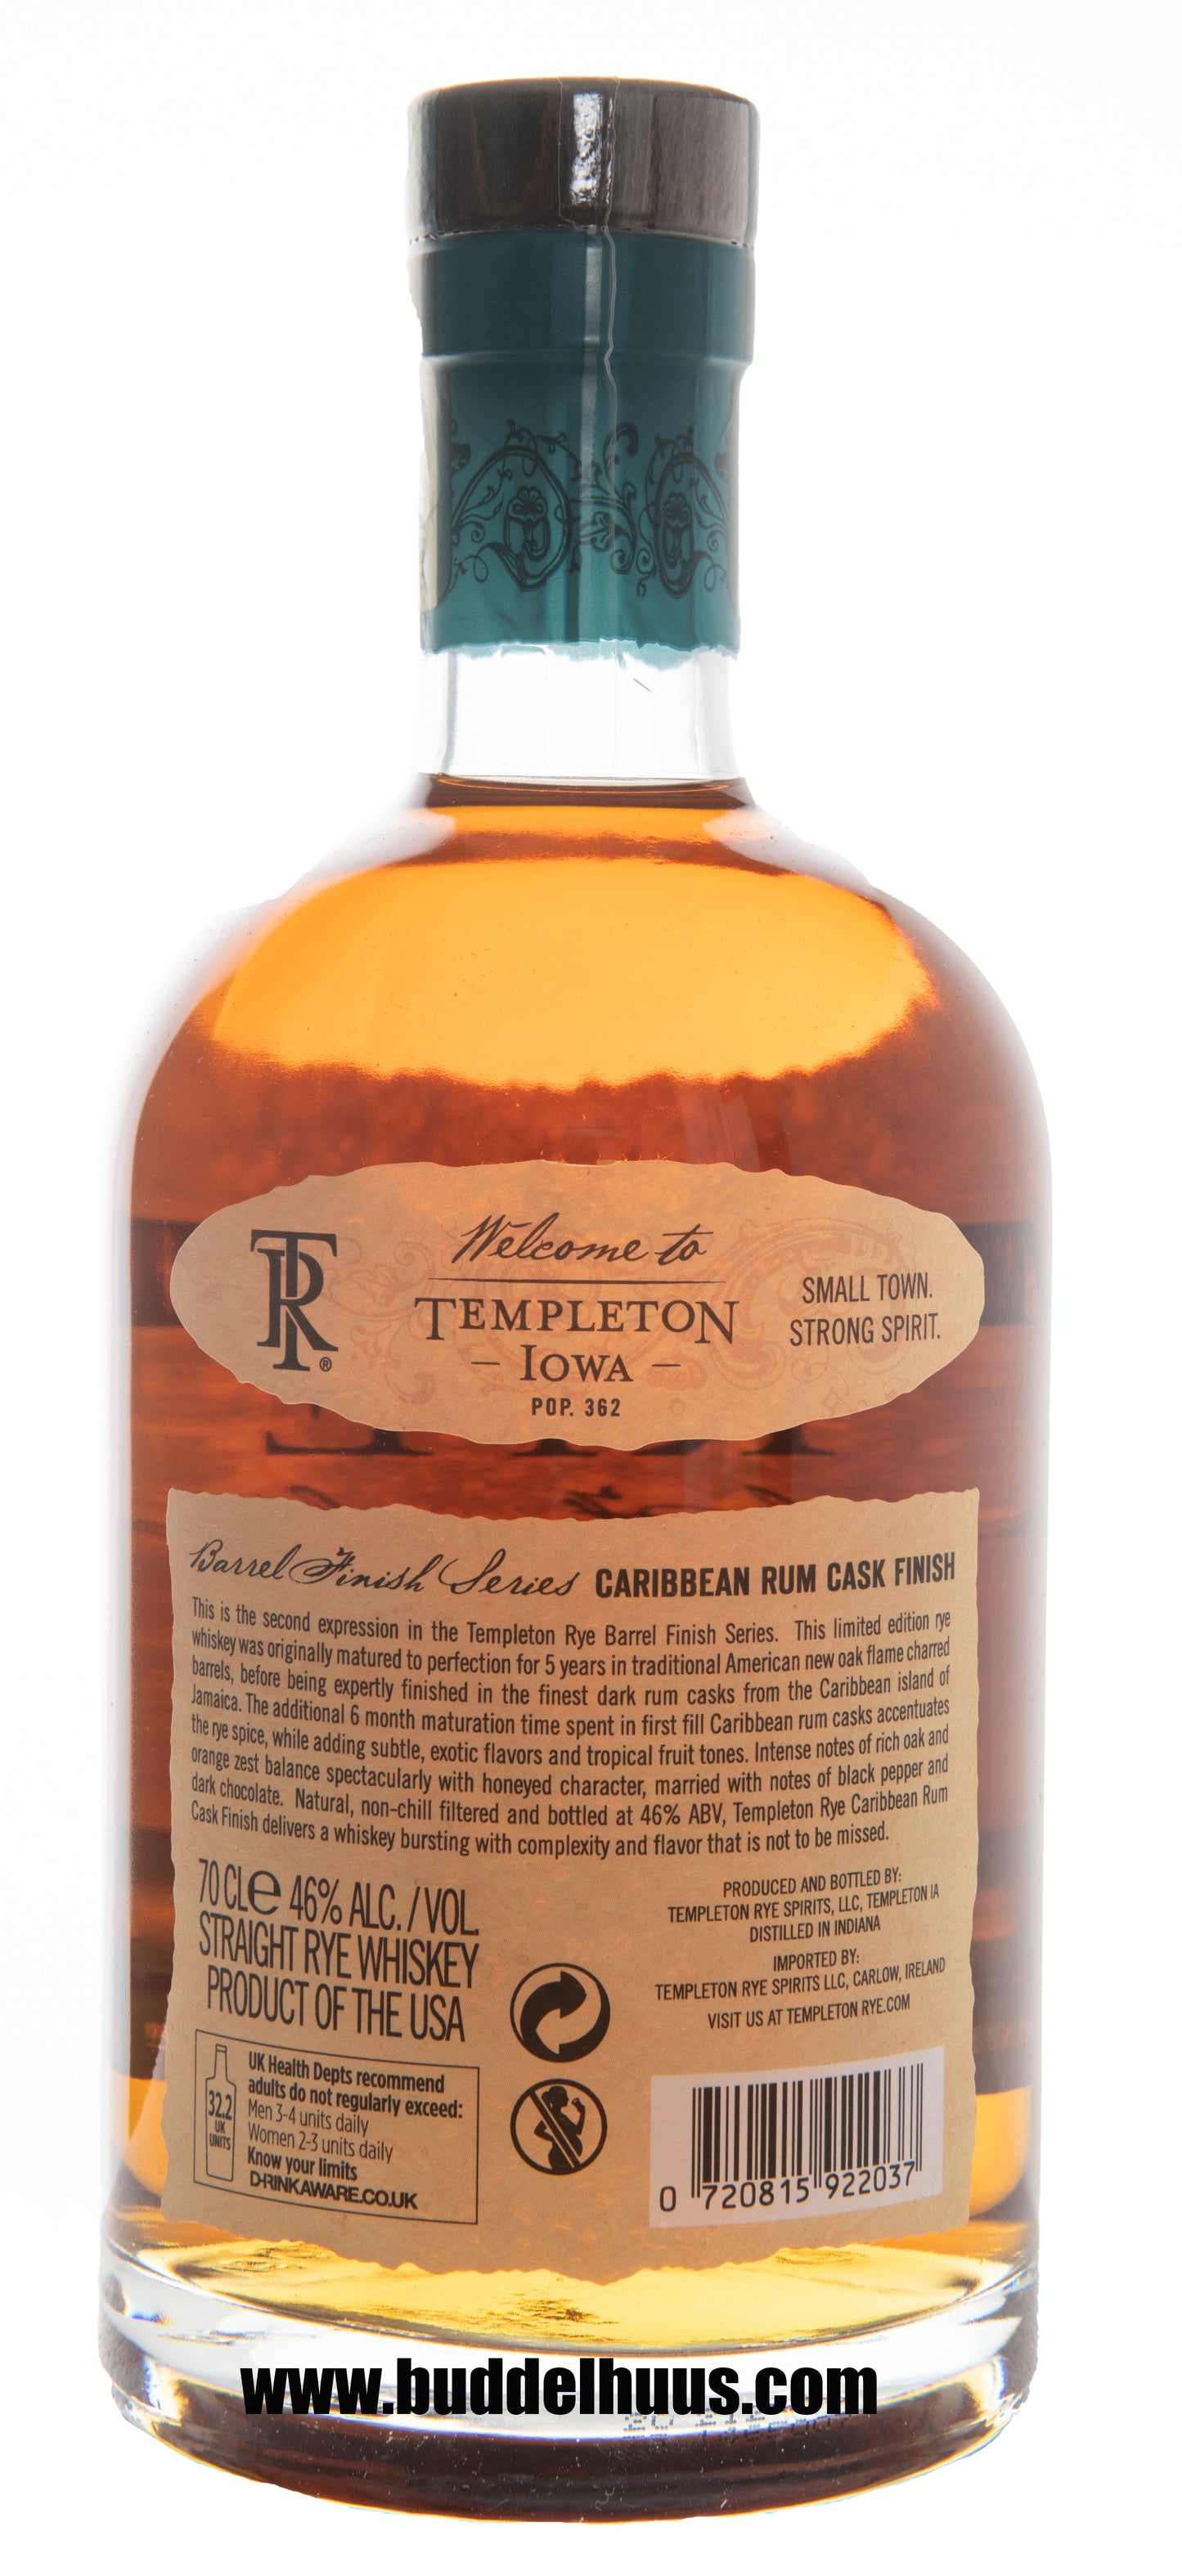 Templeton Rye Caribbean Rum Cask